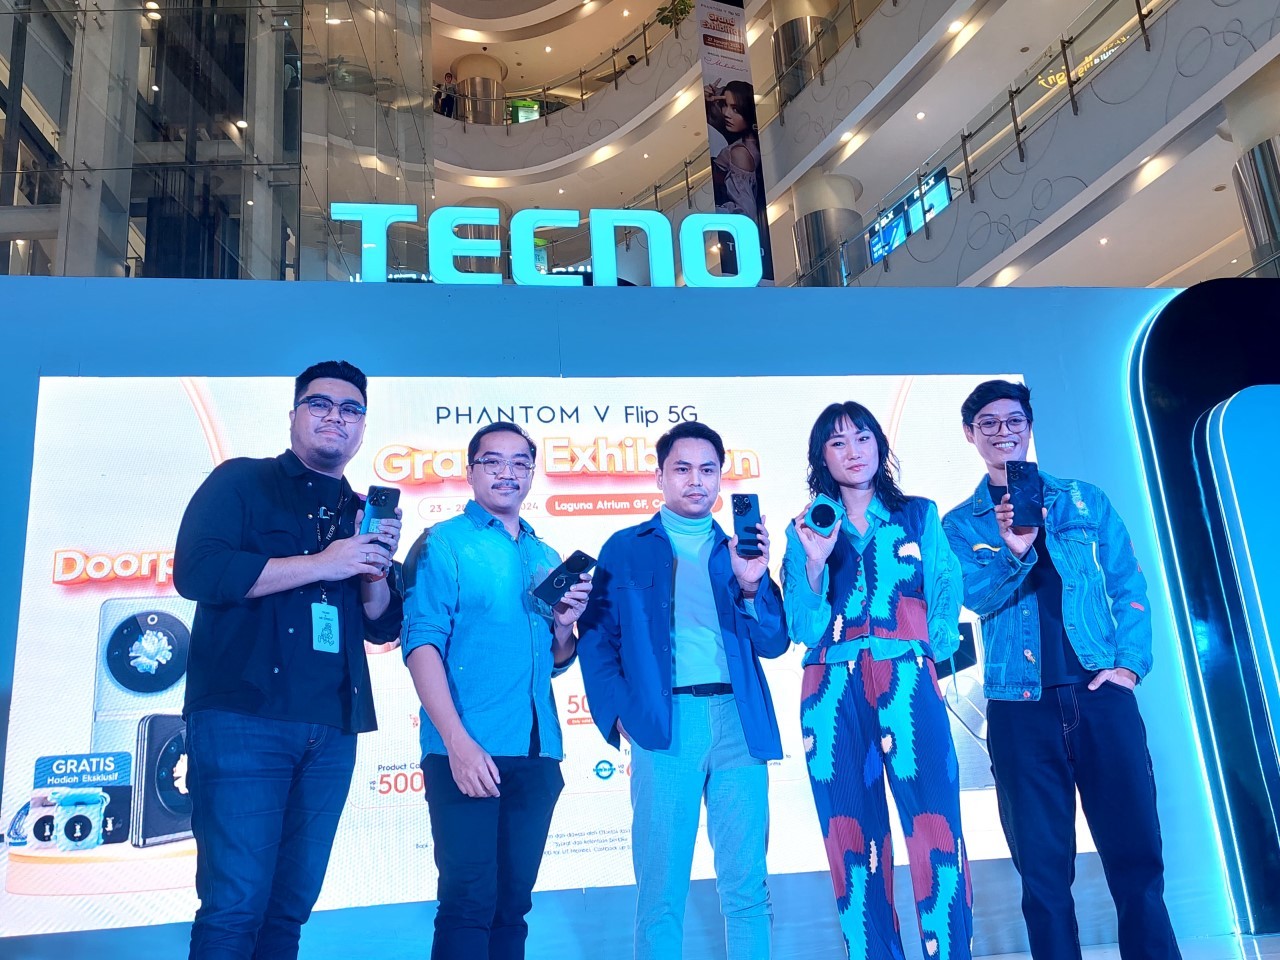 Tebar Promo Menarik, TECNO PHANTOM V Flip 5G Grand Exhibition Digelar di Jakarta